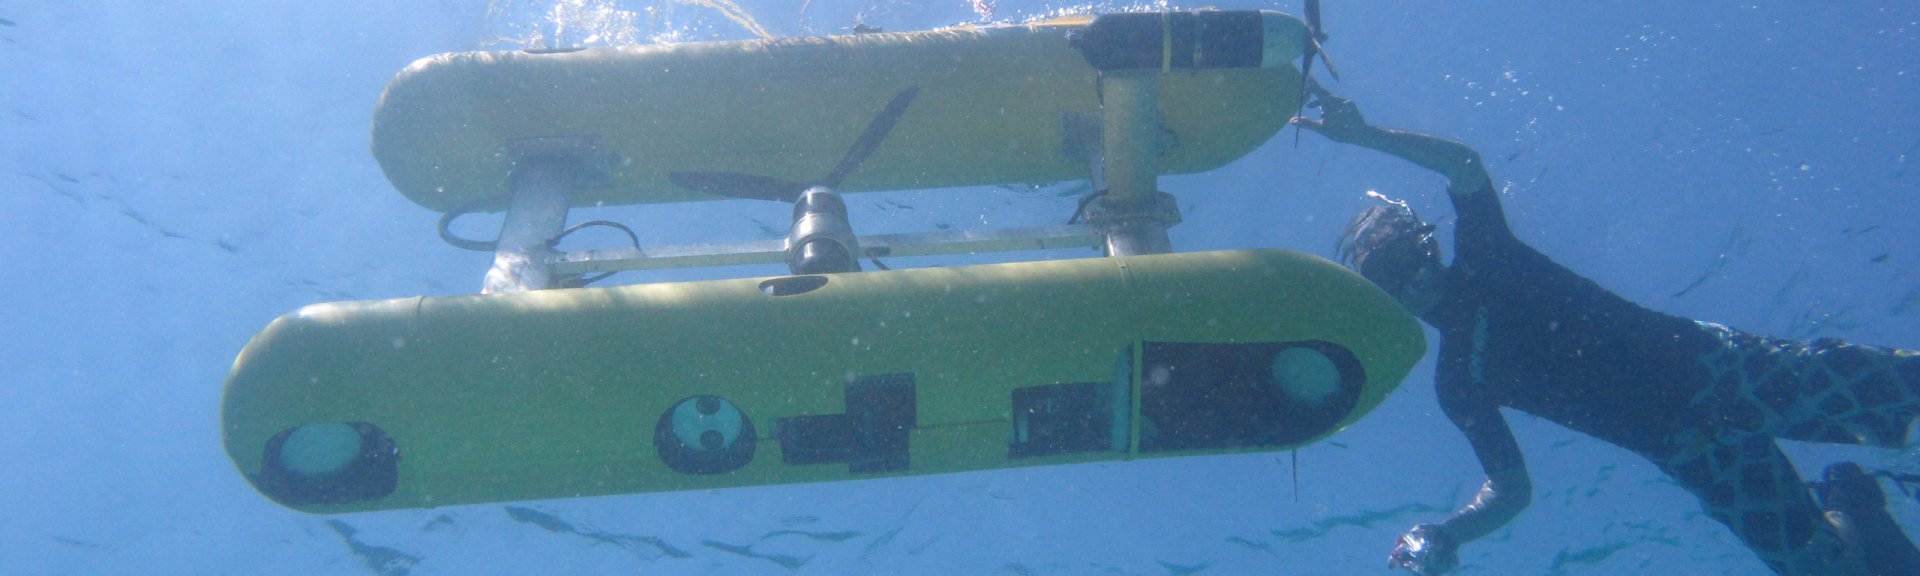 An autonomous underwater vehicle and diver. Photo by Kim Brooks